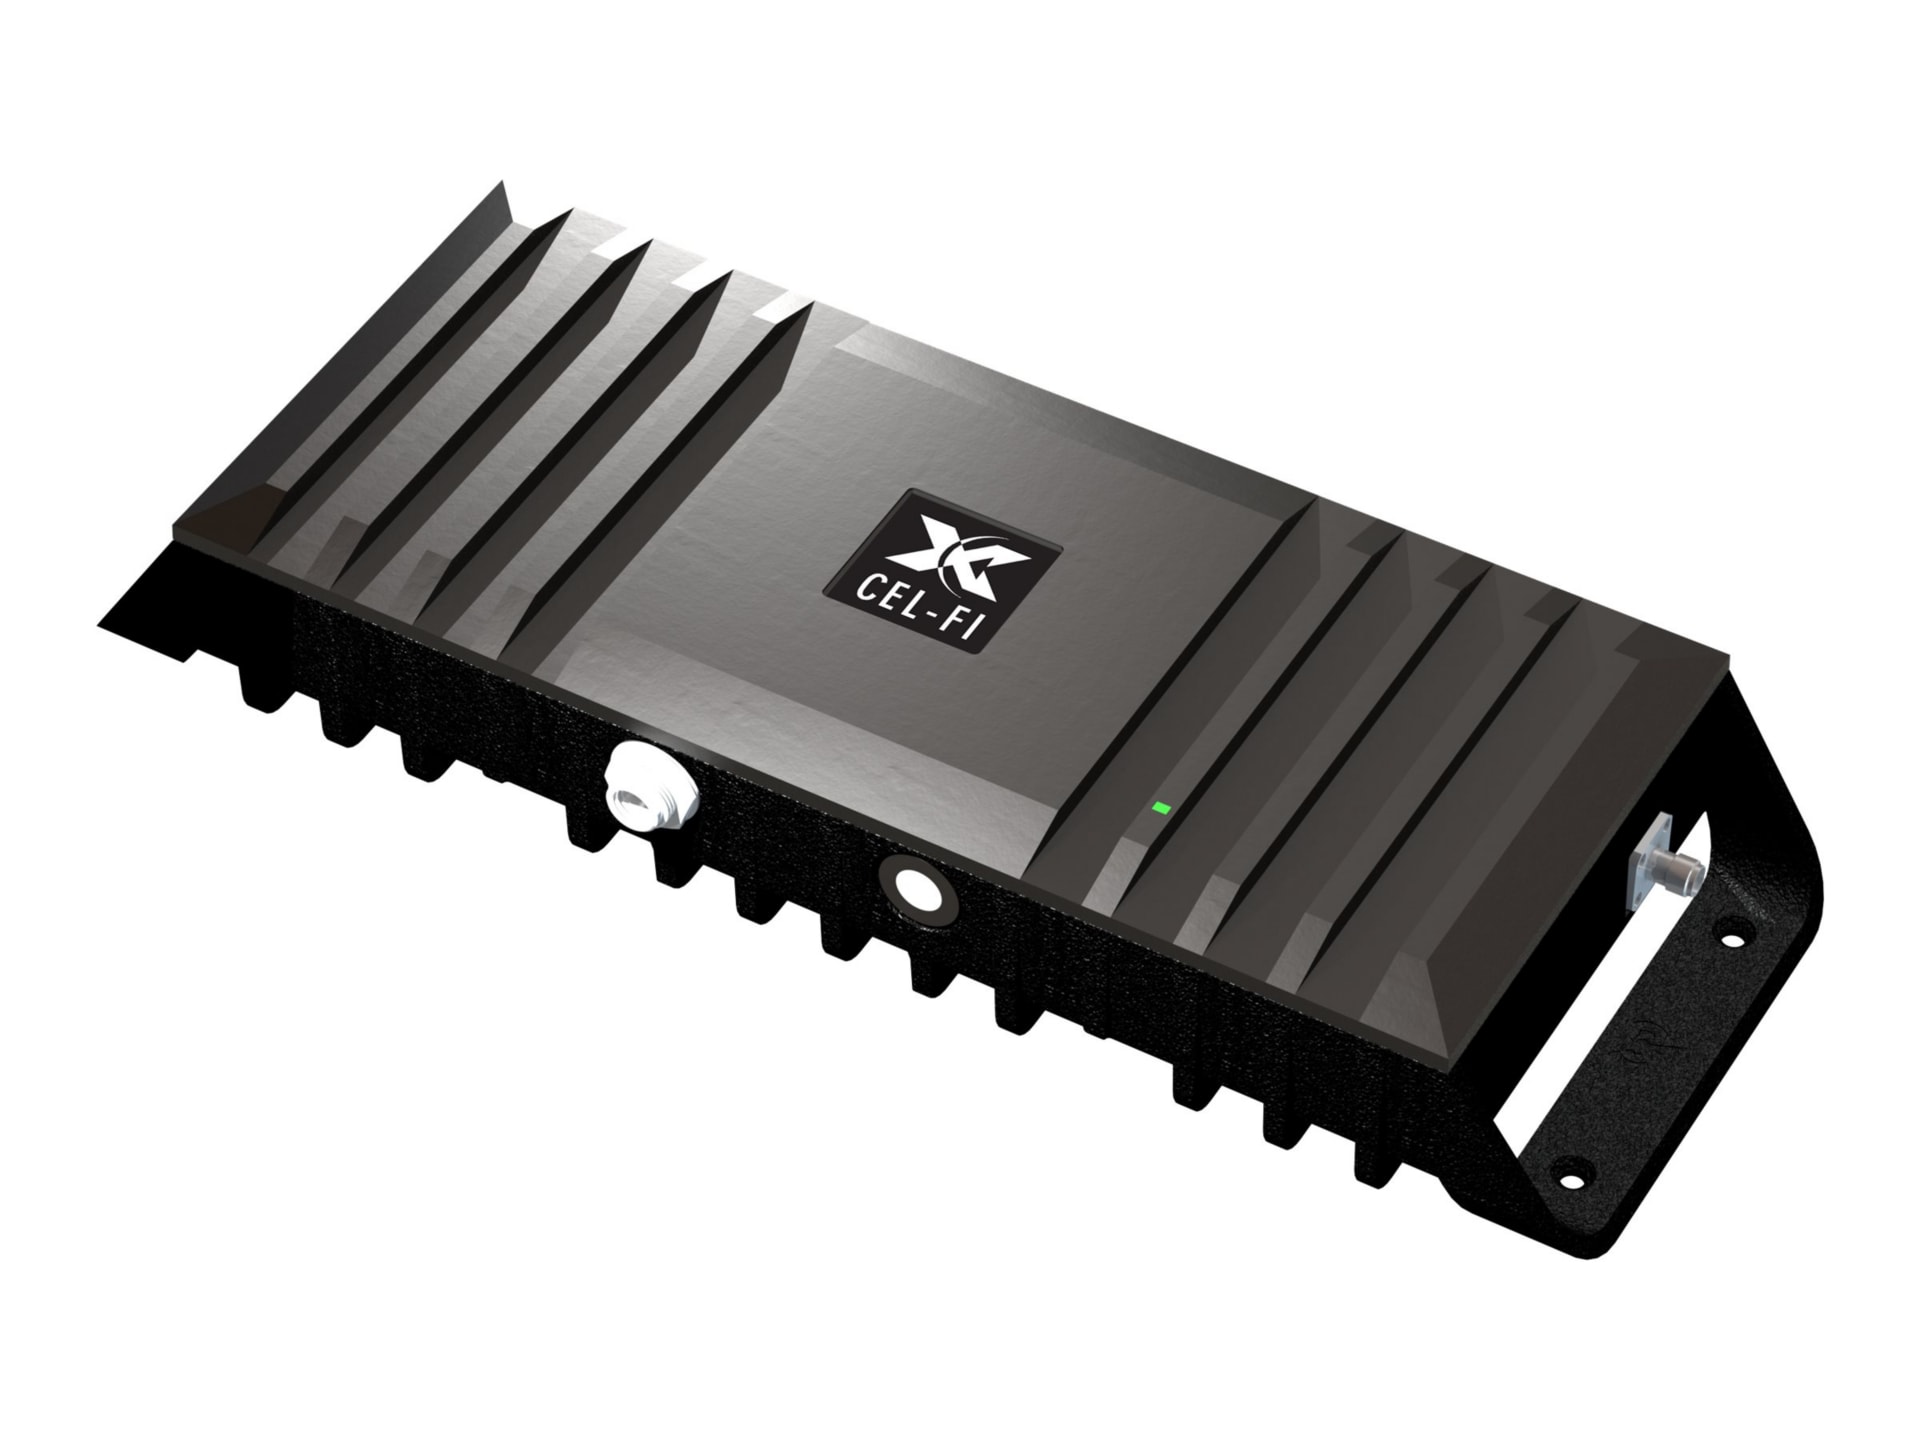 Nextivity Cel-Fi GO M - booster kit for cellular phone